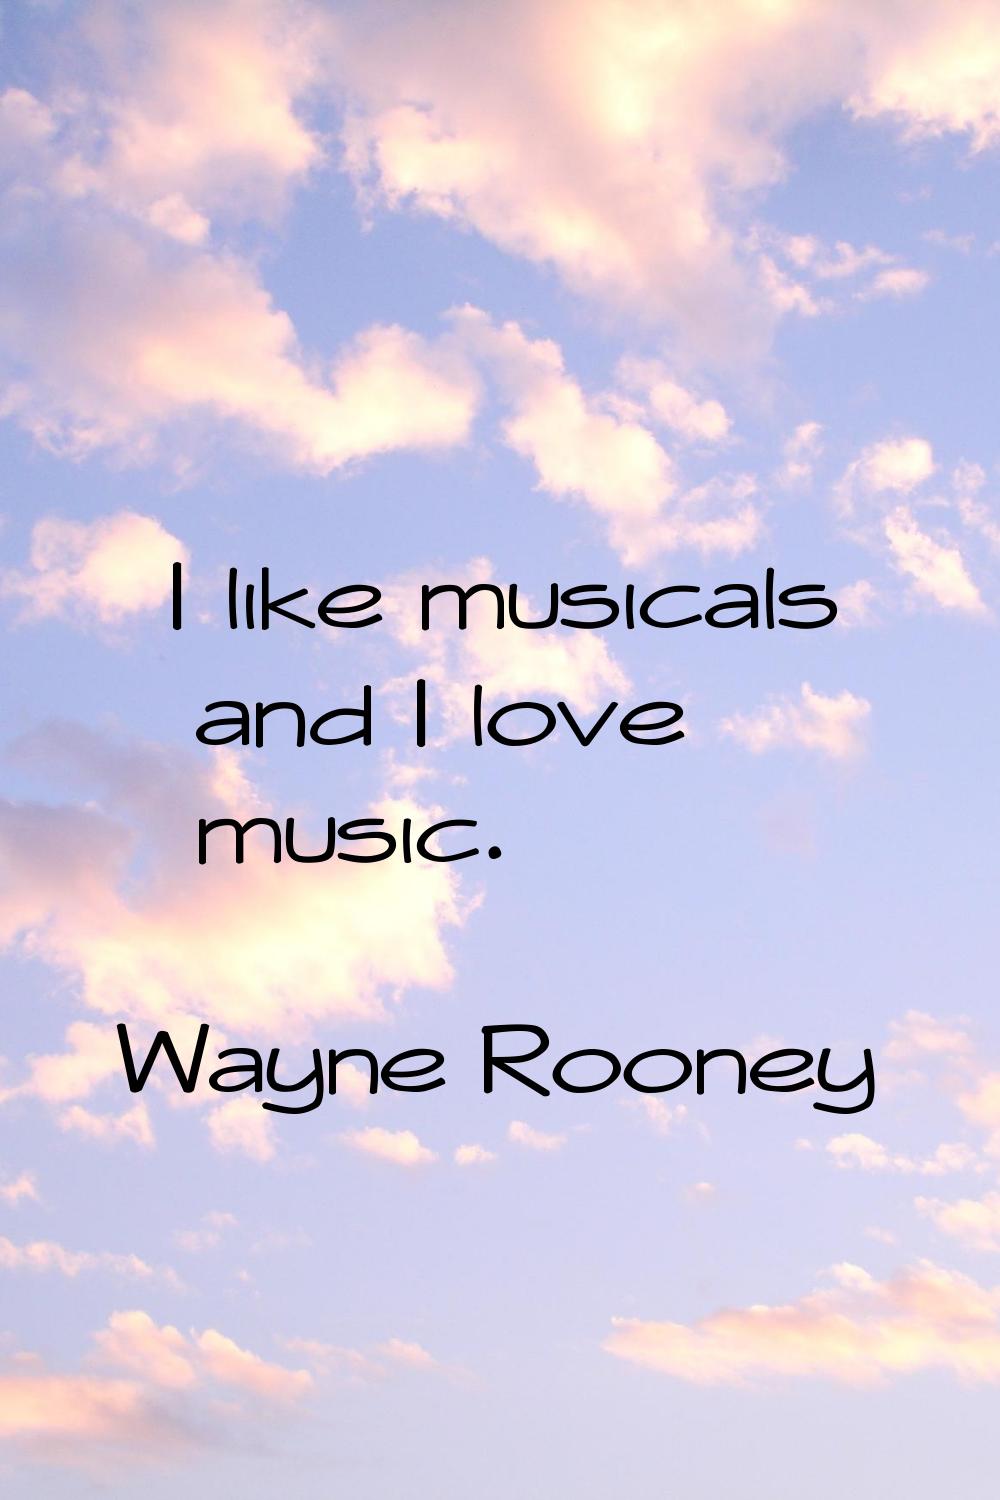 I like musicals and I love music.